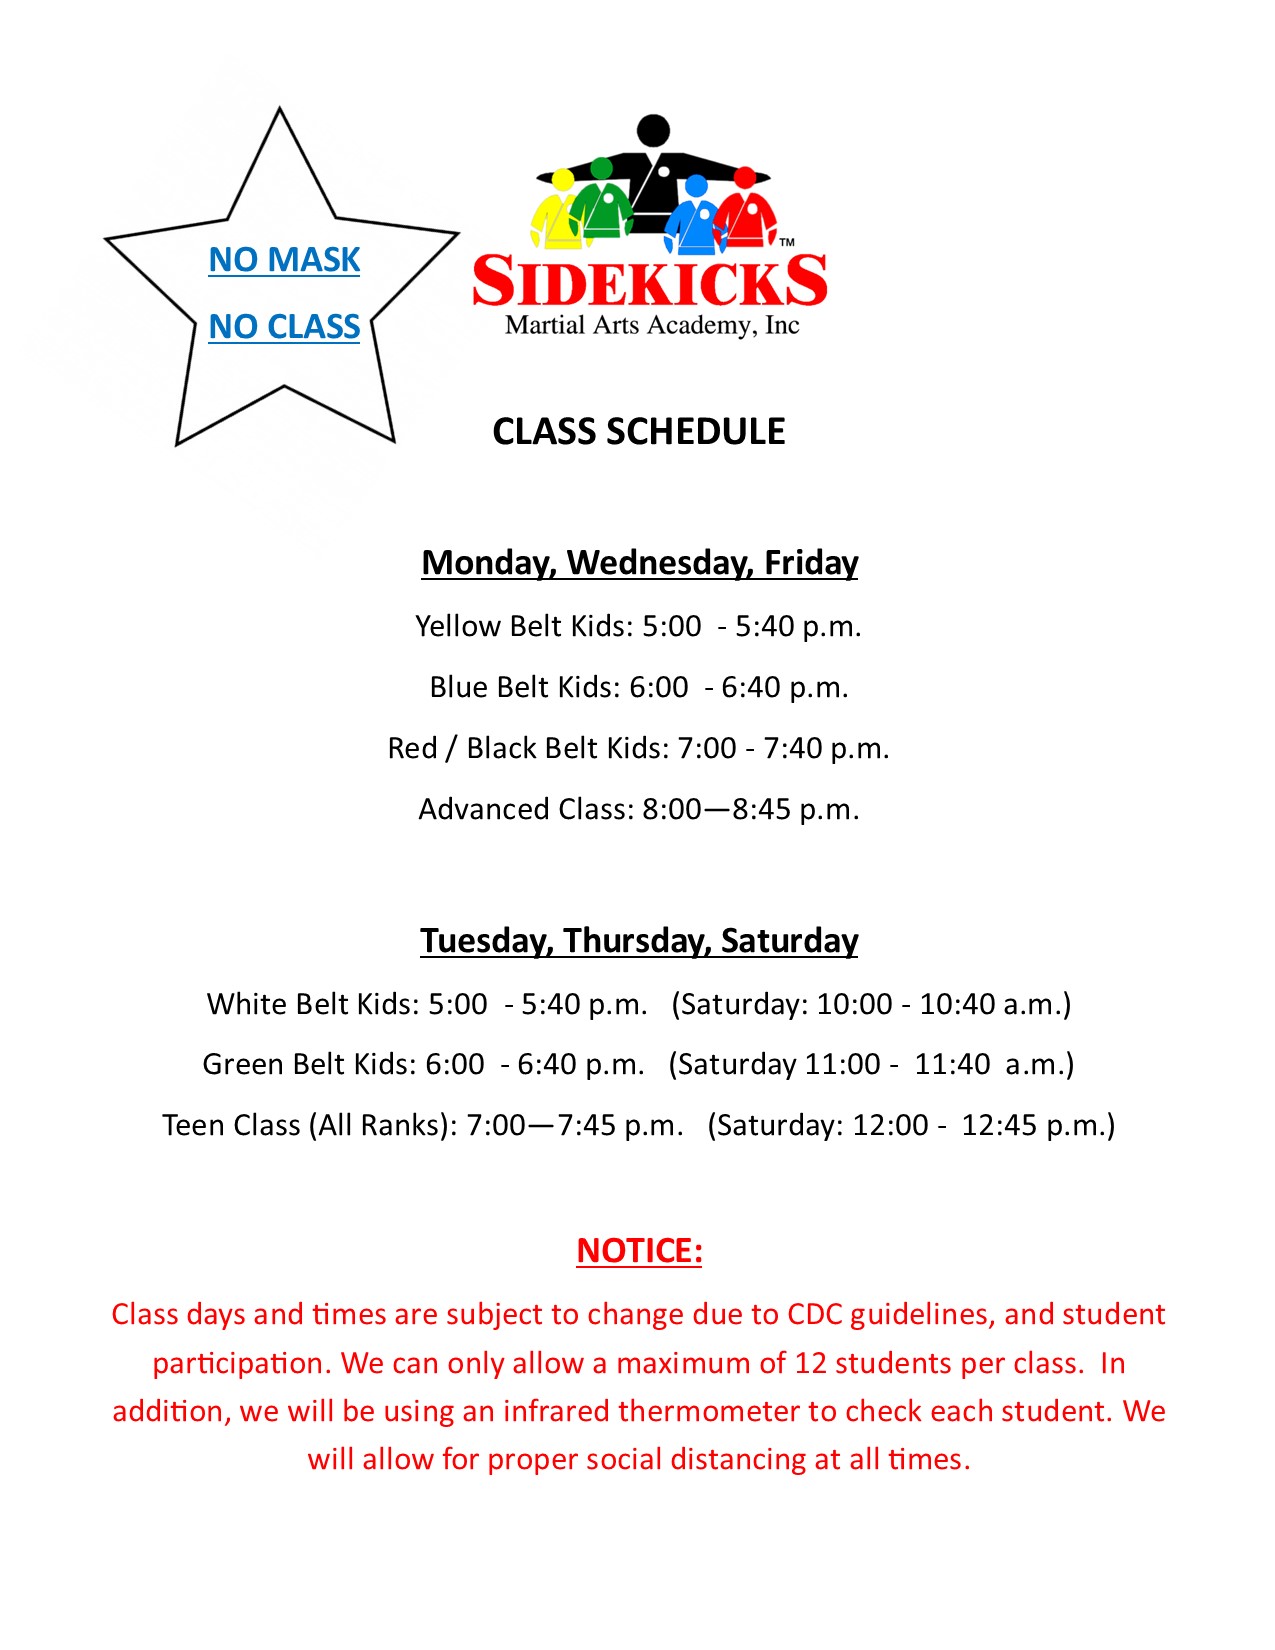 Sidekicks Class Schedule 2020